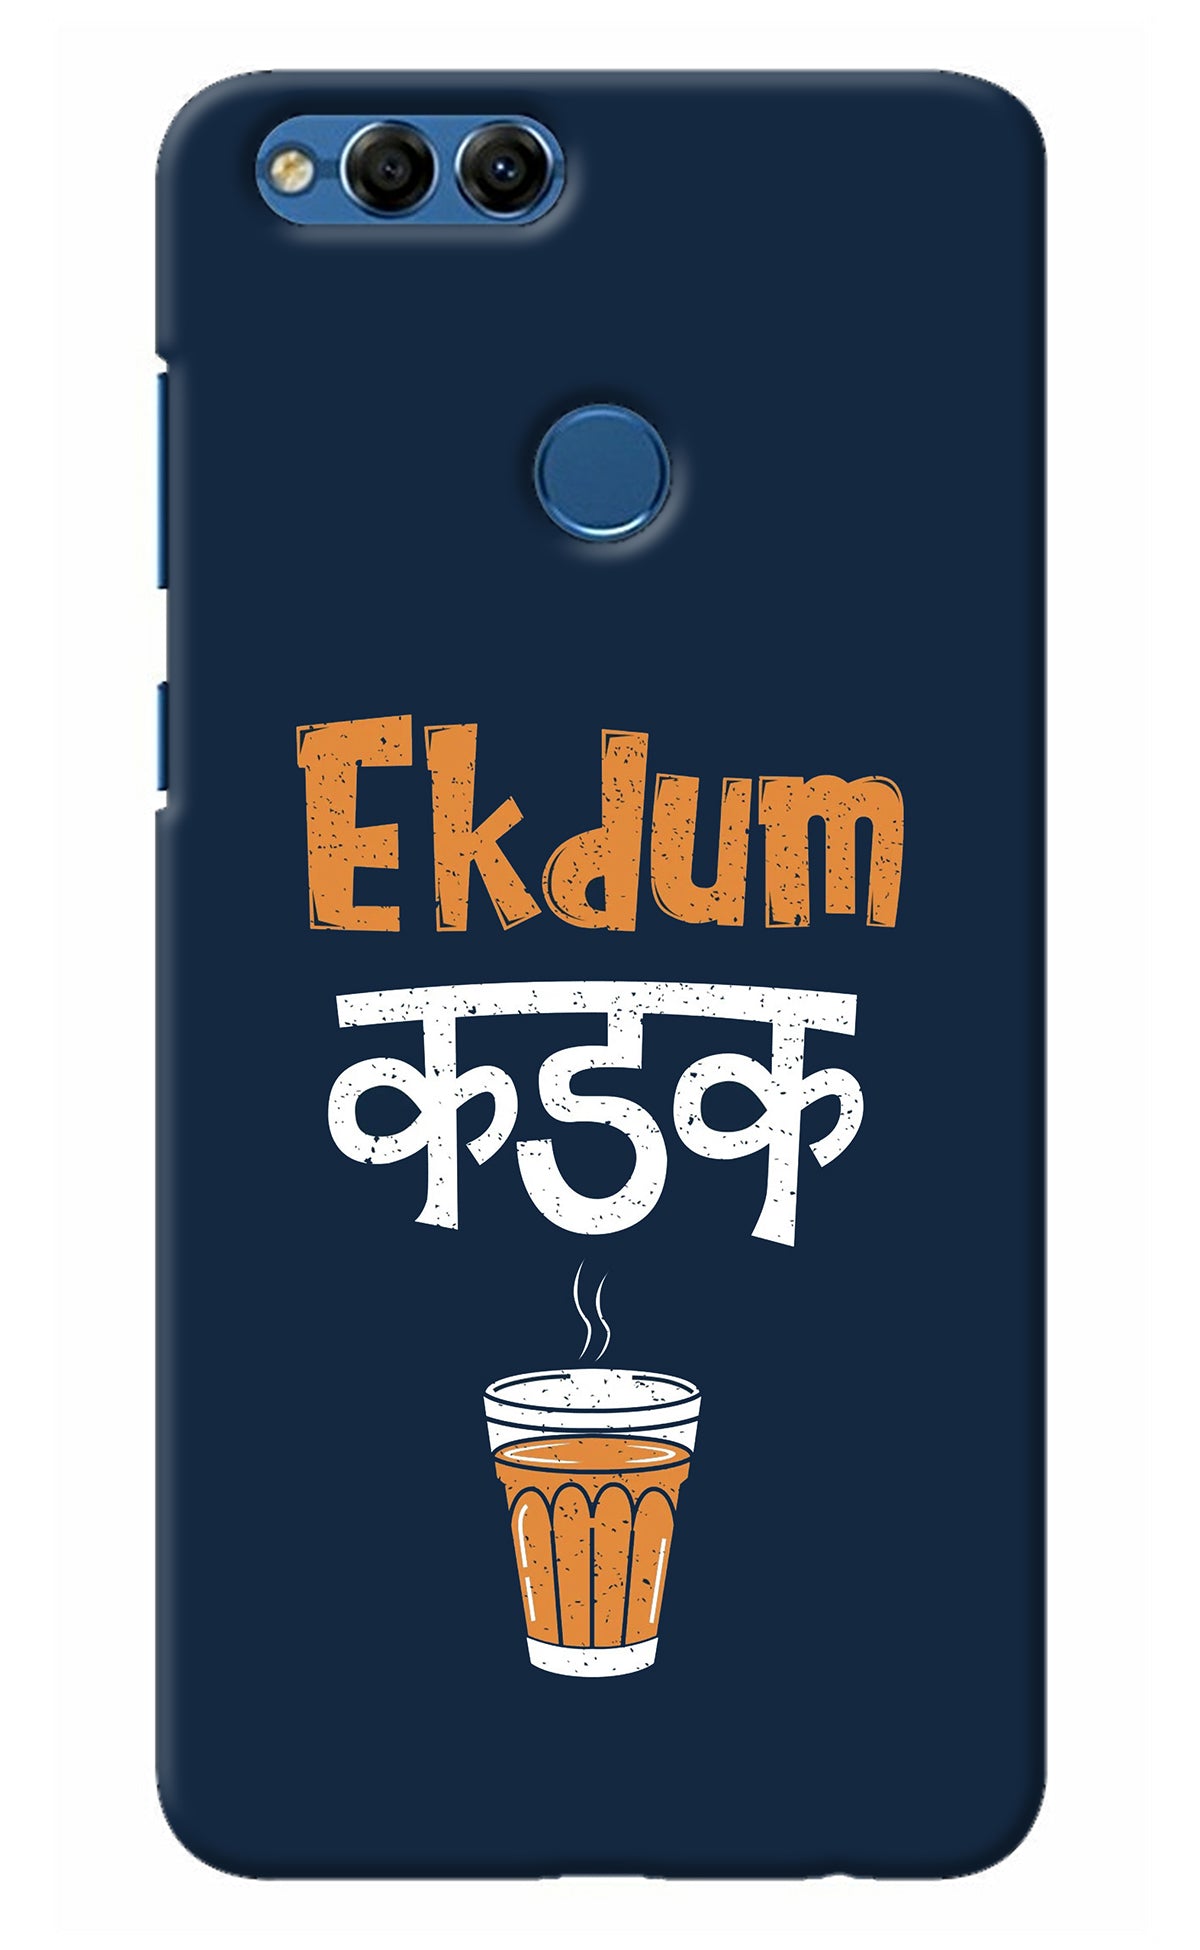 Ekdum Kadak Chai Honor 7X Back Cover